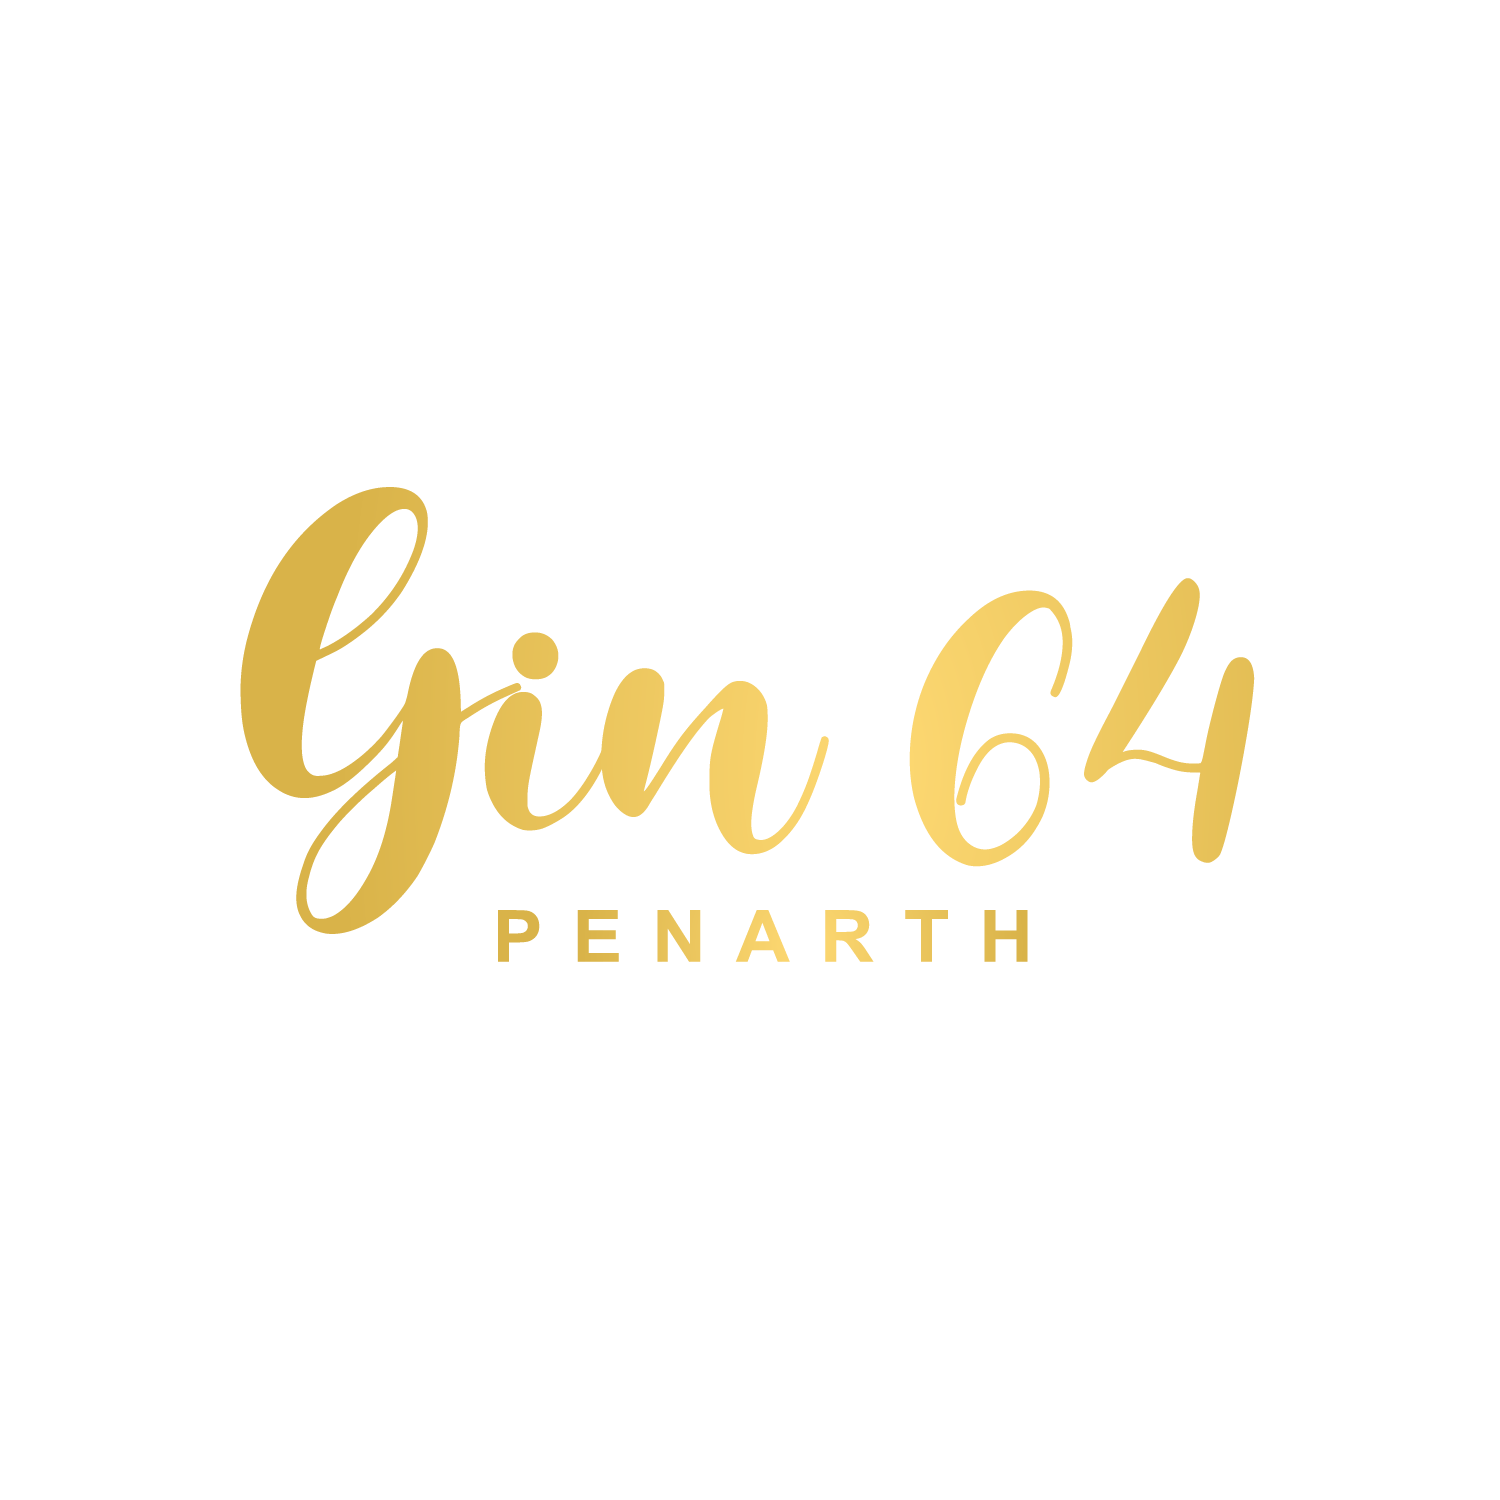 Gin64 Penarth